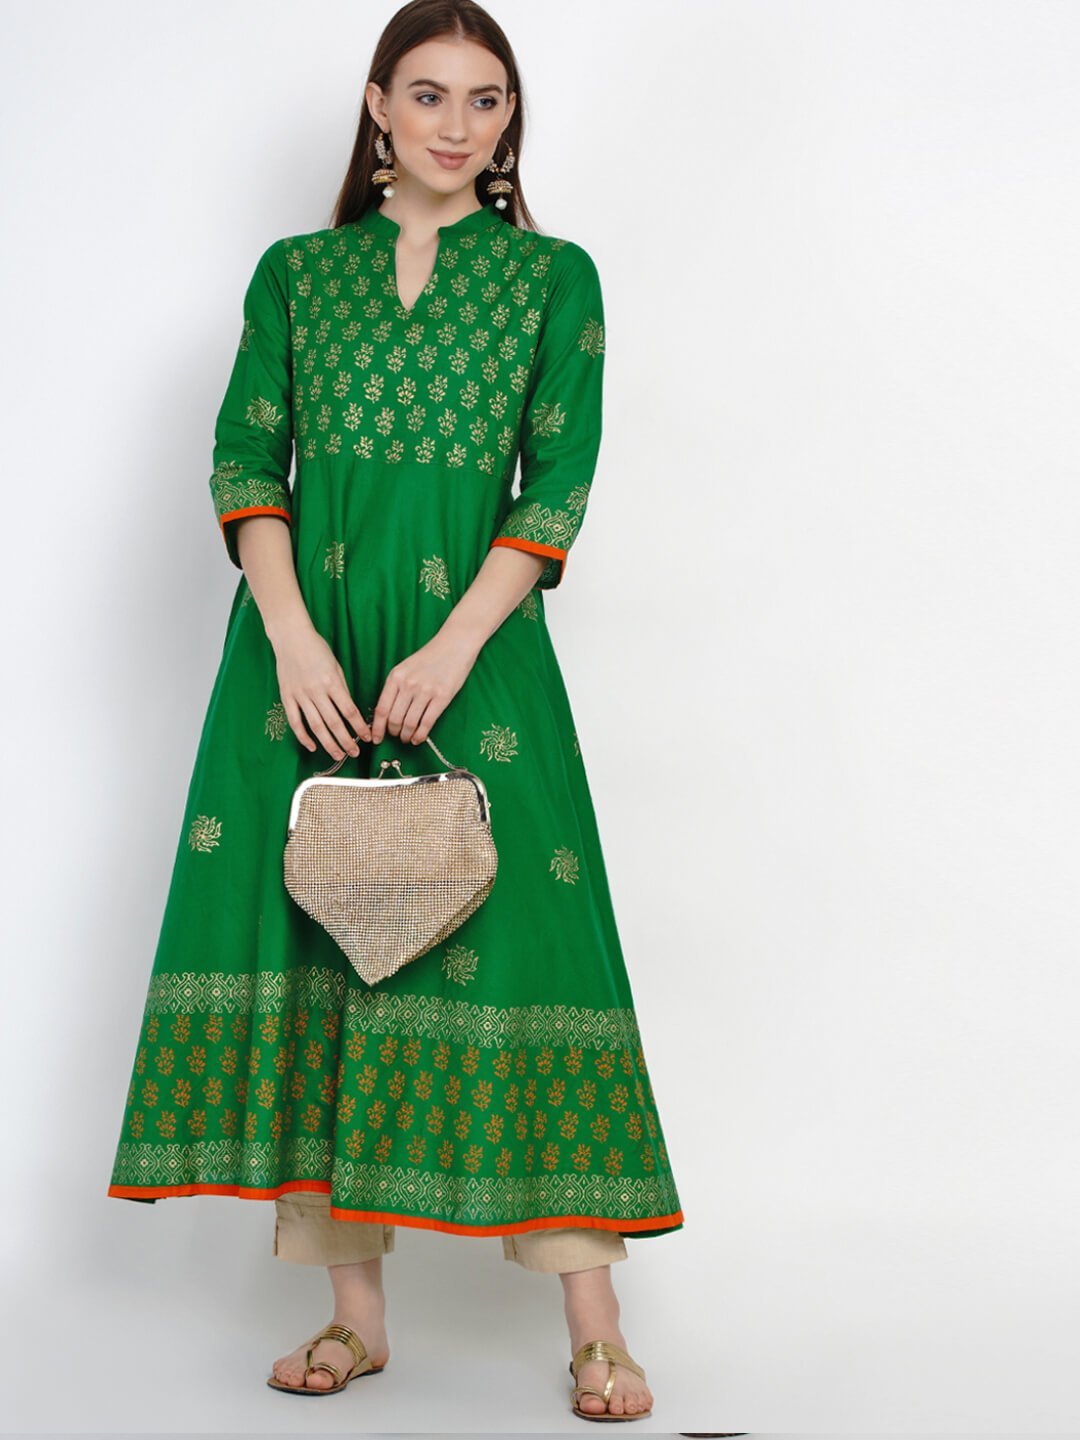 Women's Festive Green Cotton Anarkali With Ajrakh Hand Block Print - Wahe-Noor